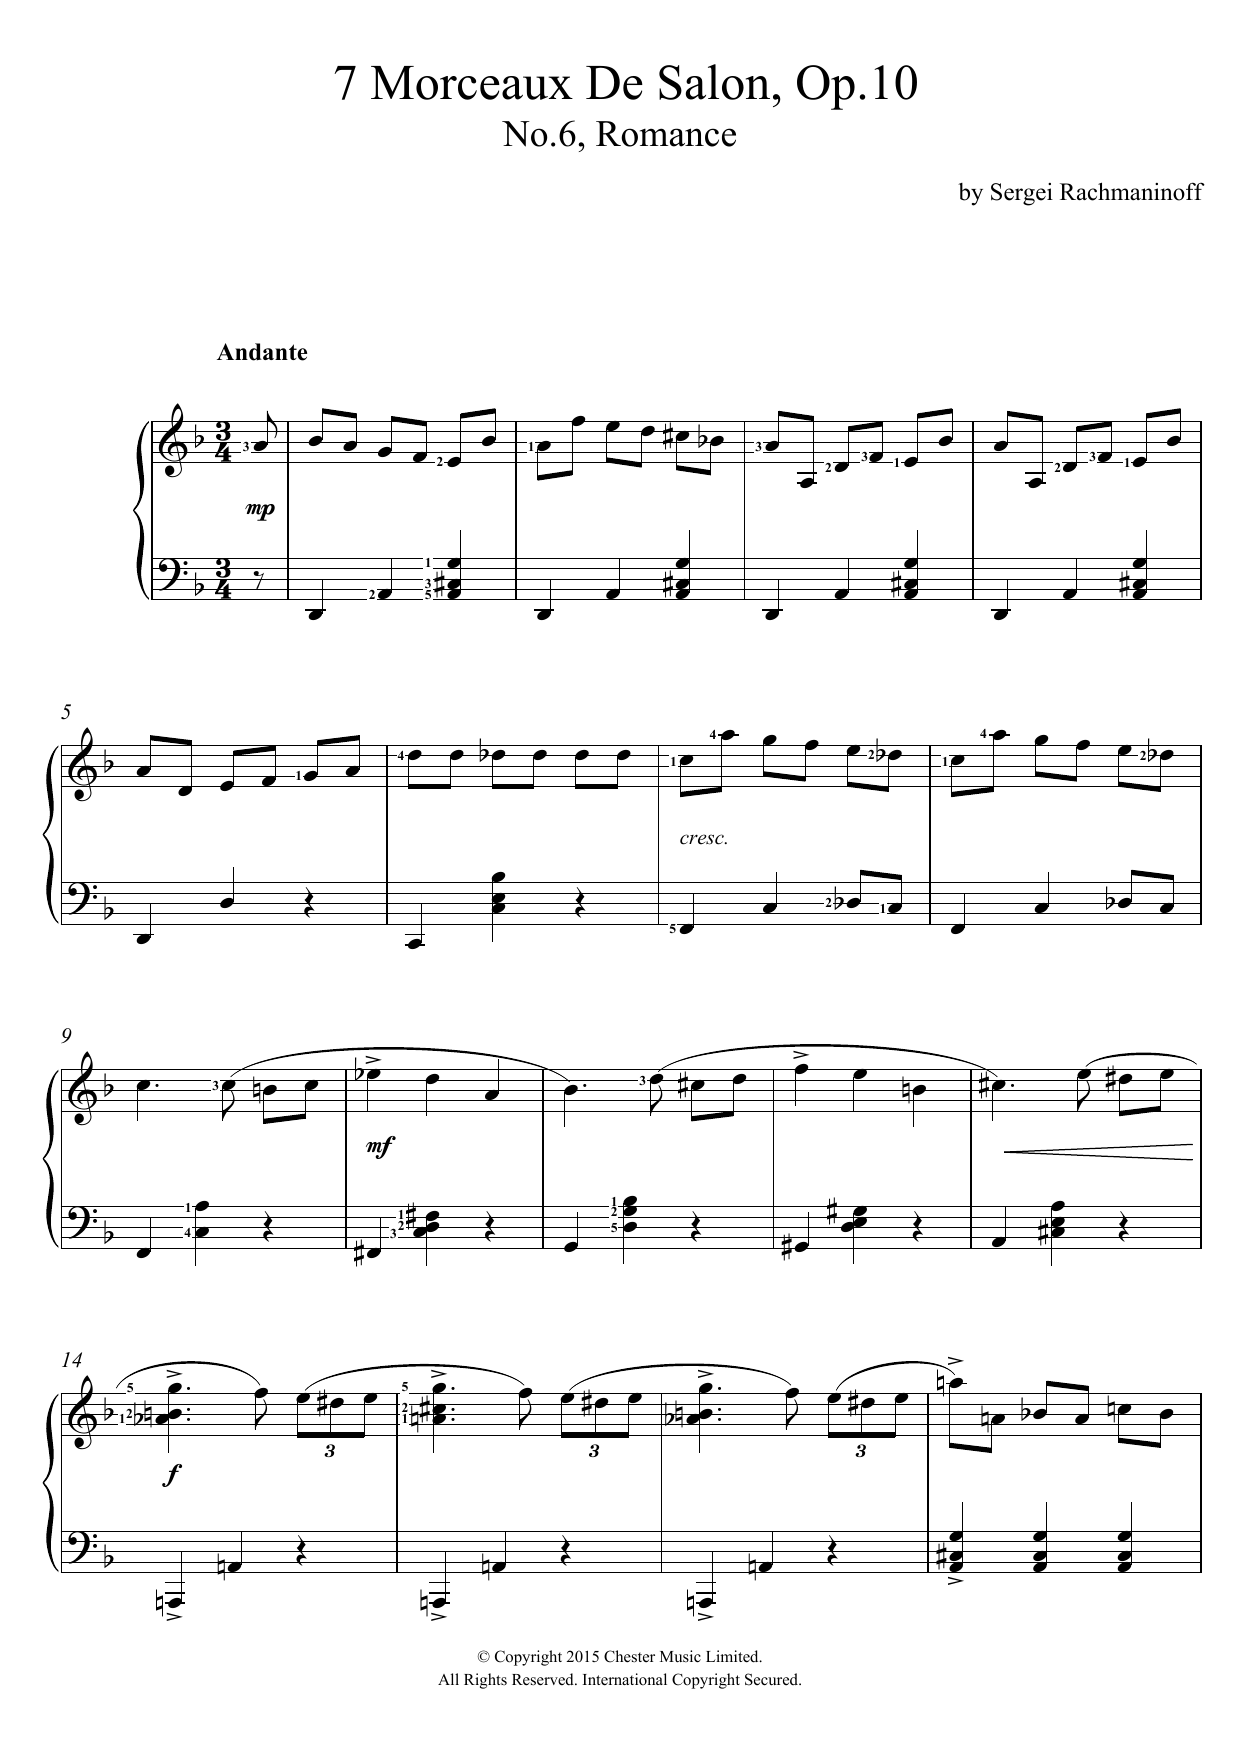 Romance (No.6 From 7 Morceaux De Salon, Op.10) (Piano & Vocal) von Sergei Rachmaninoff